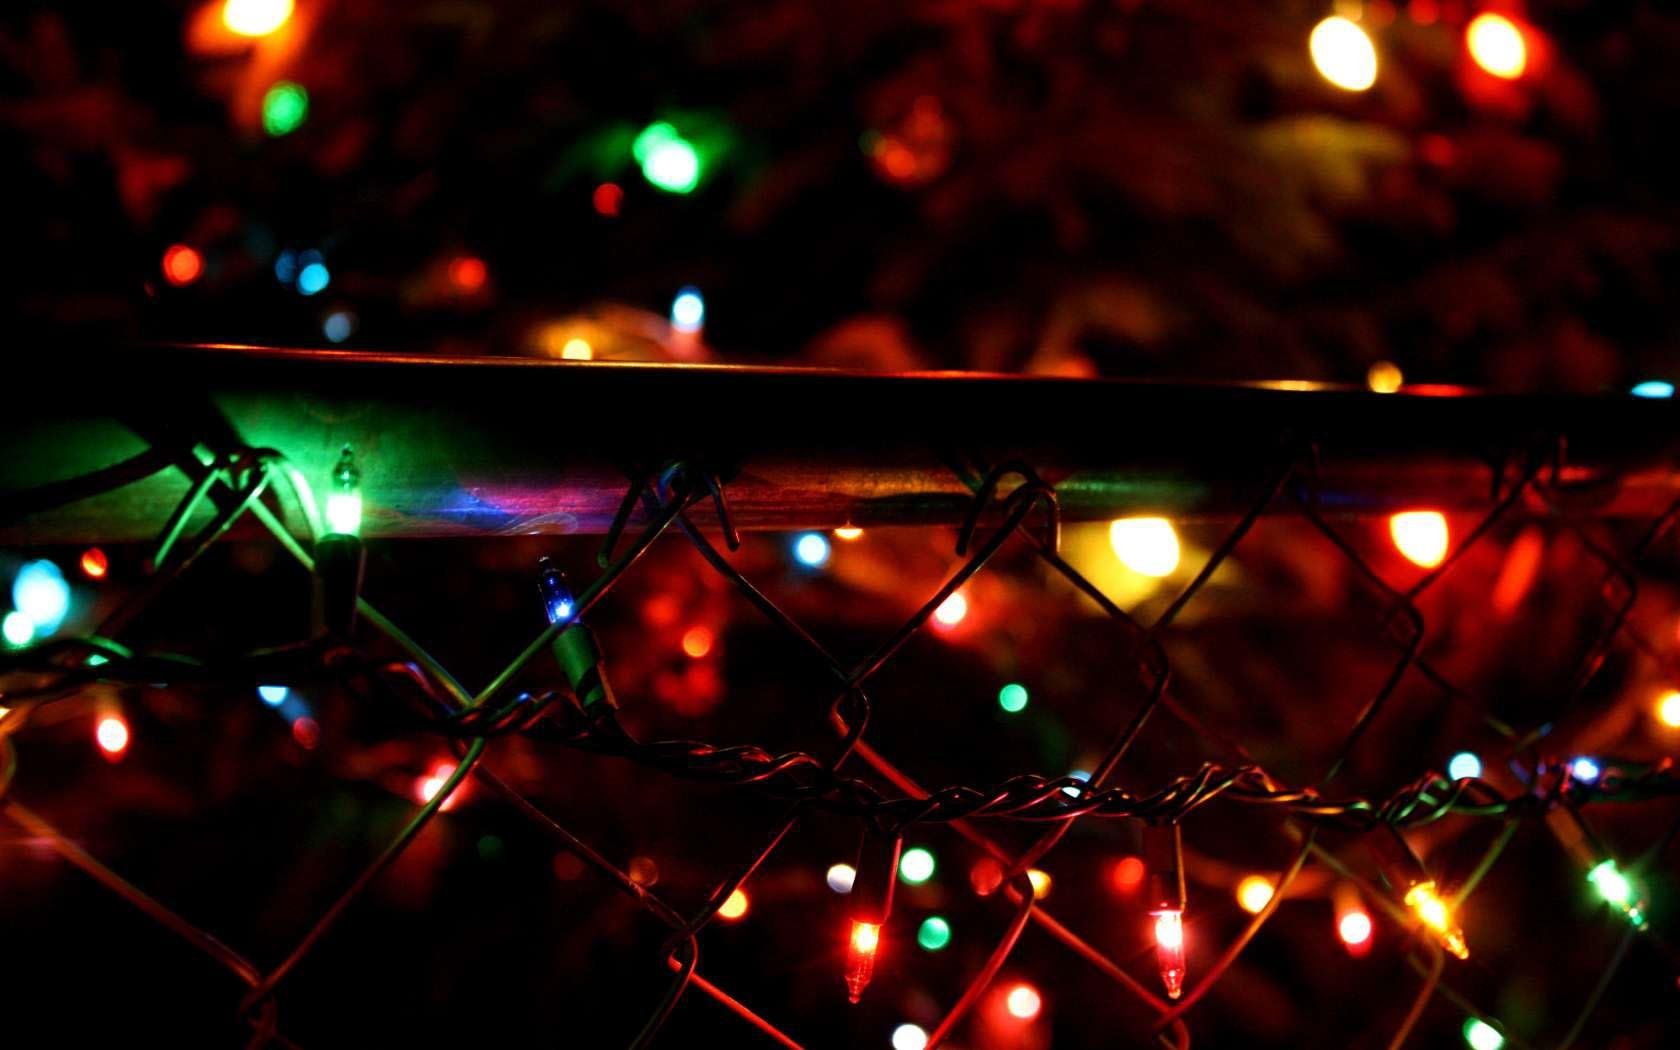 A fence with christmas lights on it - Christmas lights